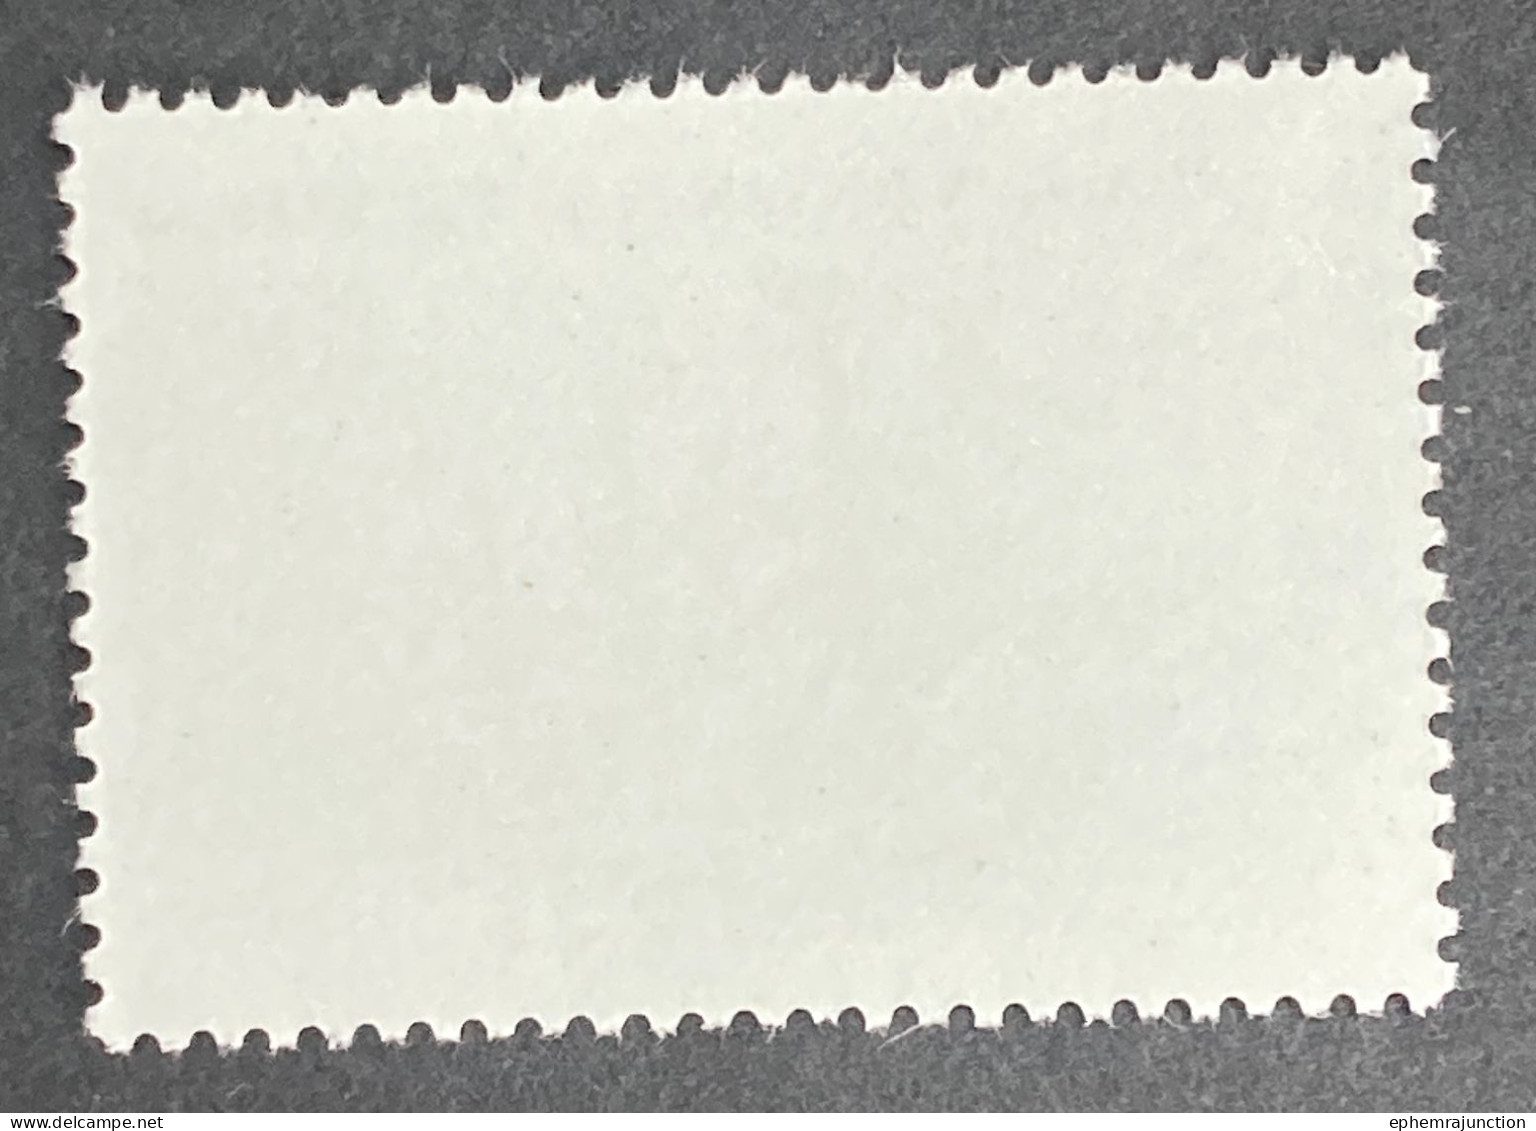 Nimrod 15c Australia Stamp 1980 Sg Aq 41 MNH - Neufs